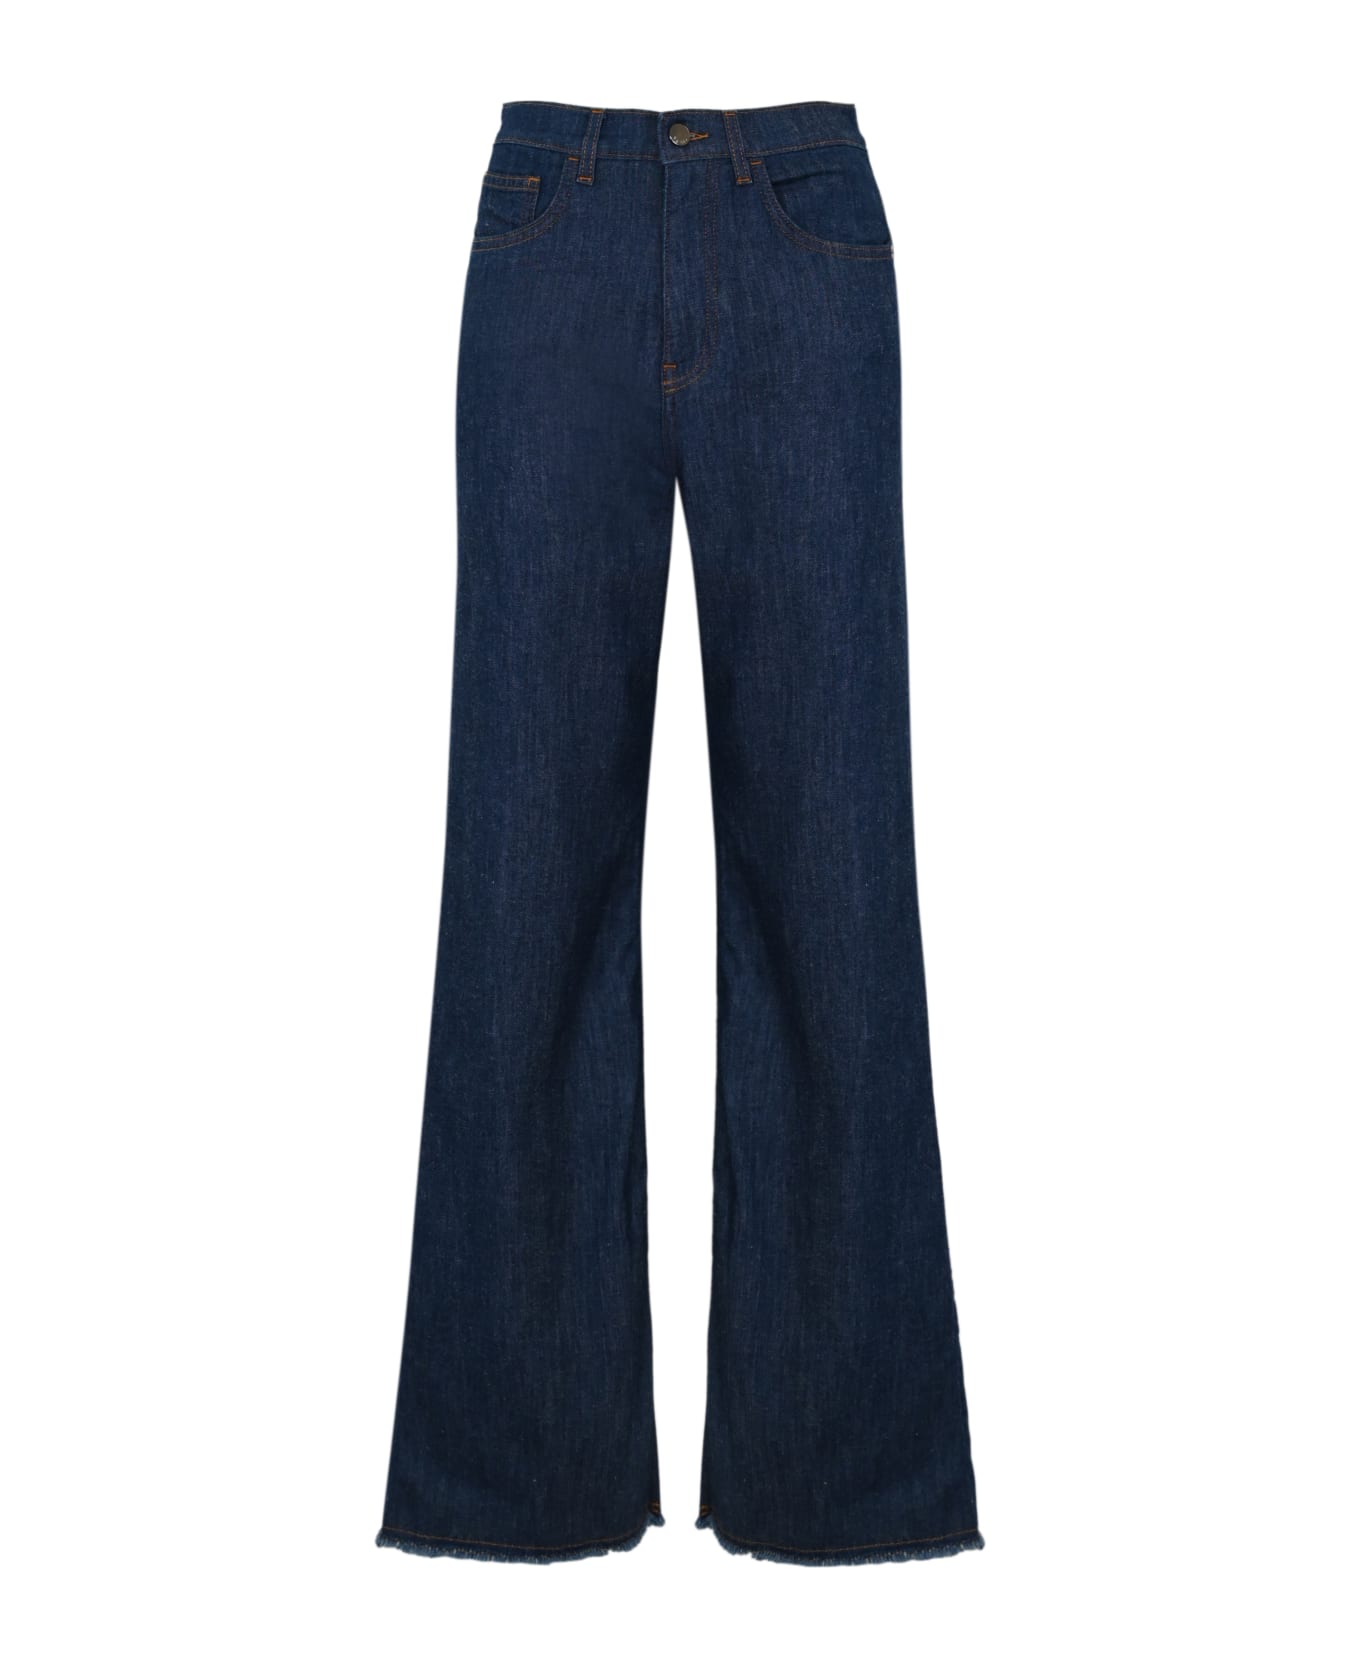 Re-HasH Flared Jeans In Dark Denim - Blue ボトムス